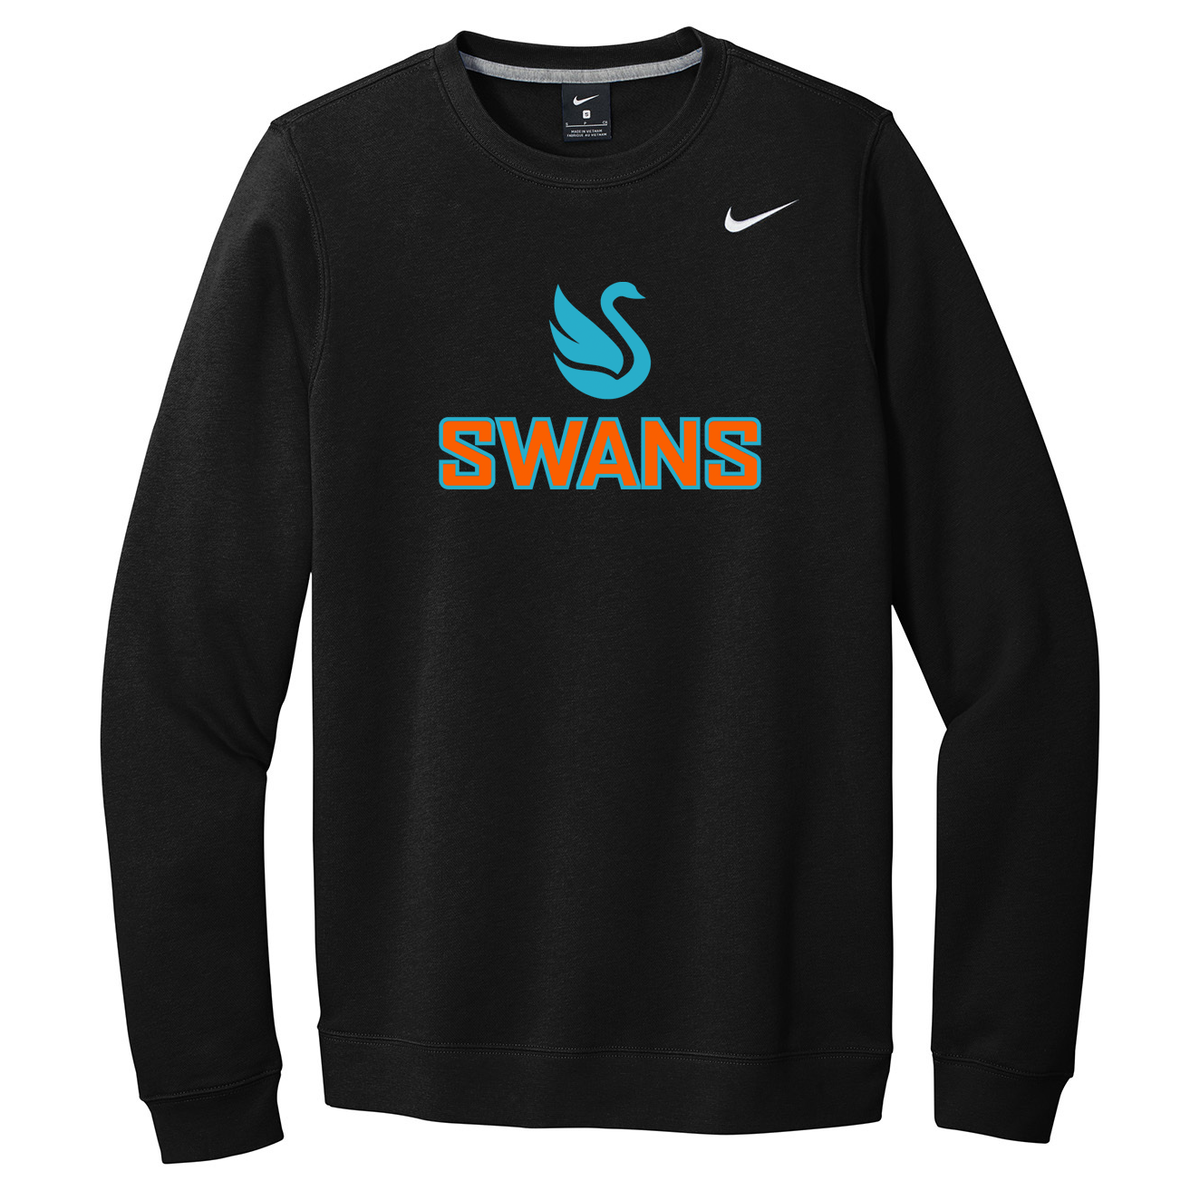 Swans Lacrosse Nike Fleece Crew Neck